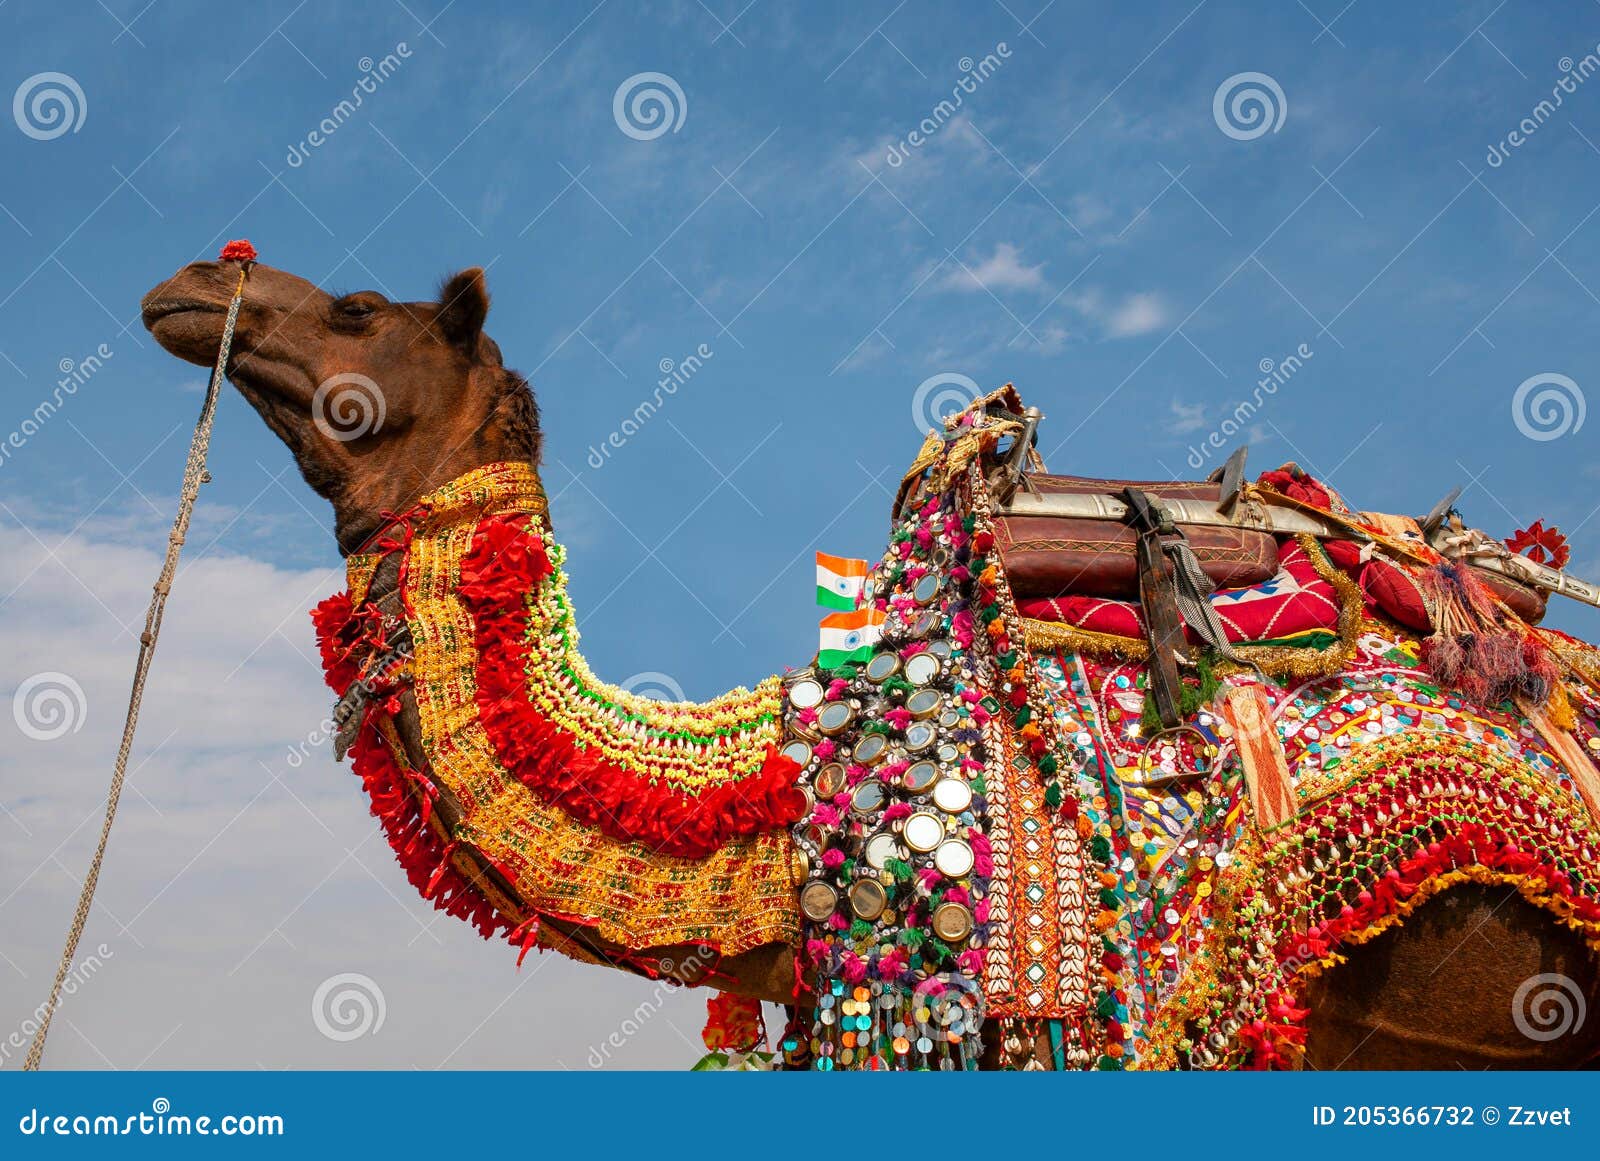 Beautiful Amusing Decorated Dromedary Camel on Bikaner Camel Festival in  Rajasthan, India Stock Photo - Image of animal, east: 205366732